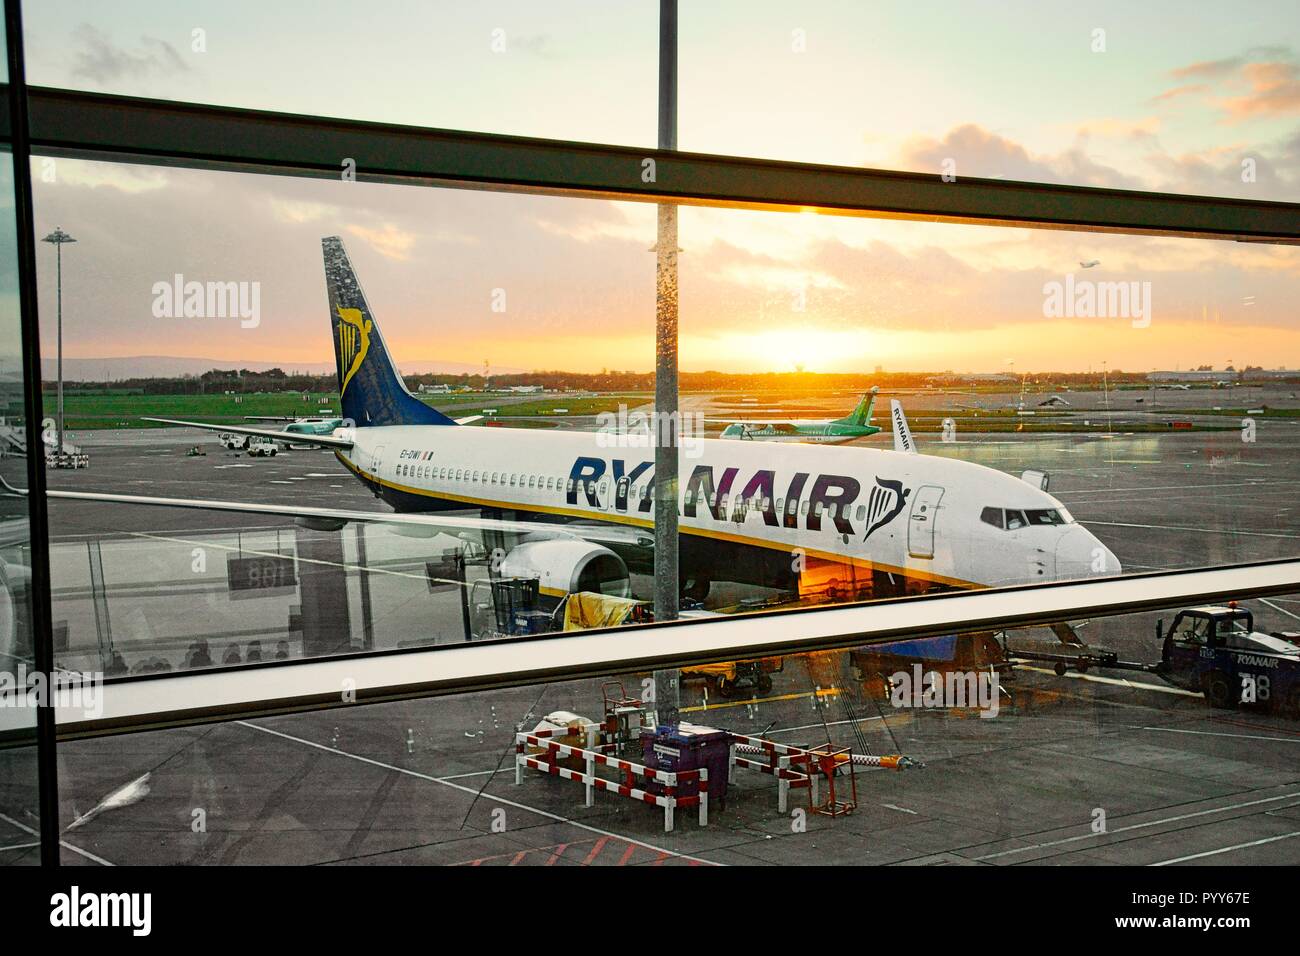 Ryanair passenger plane jet aircraft airplane on runway apron between flights seen from boarding gates of Dublin Airport Terminal Building, Ireland Stock Photo